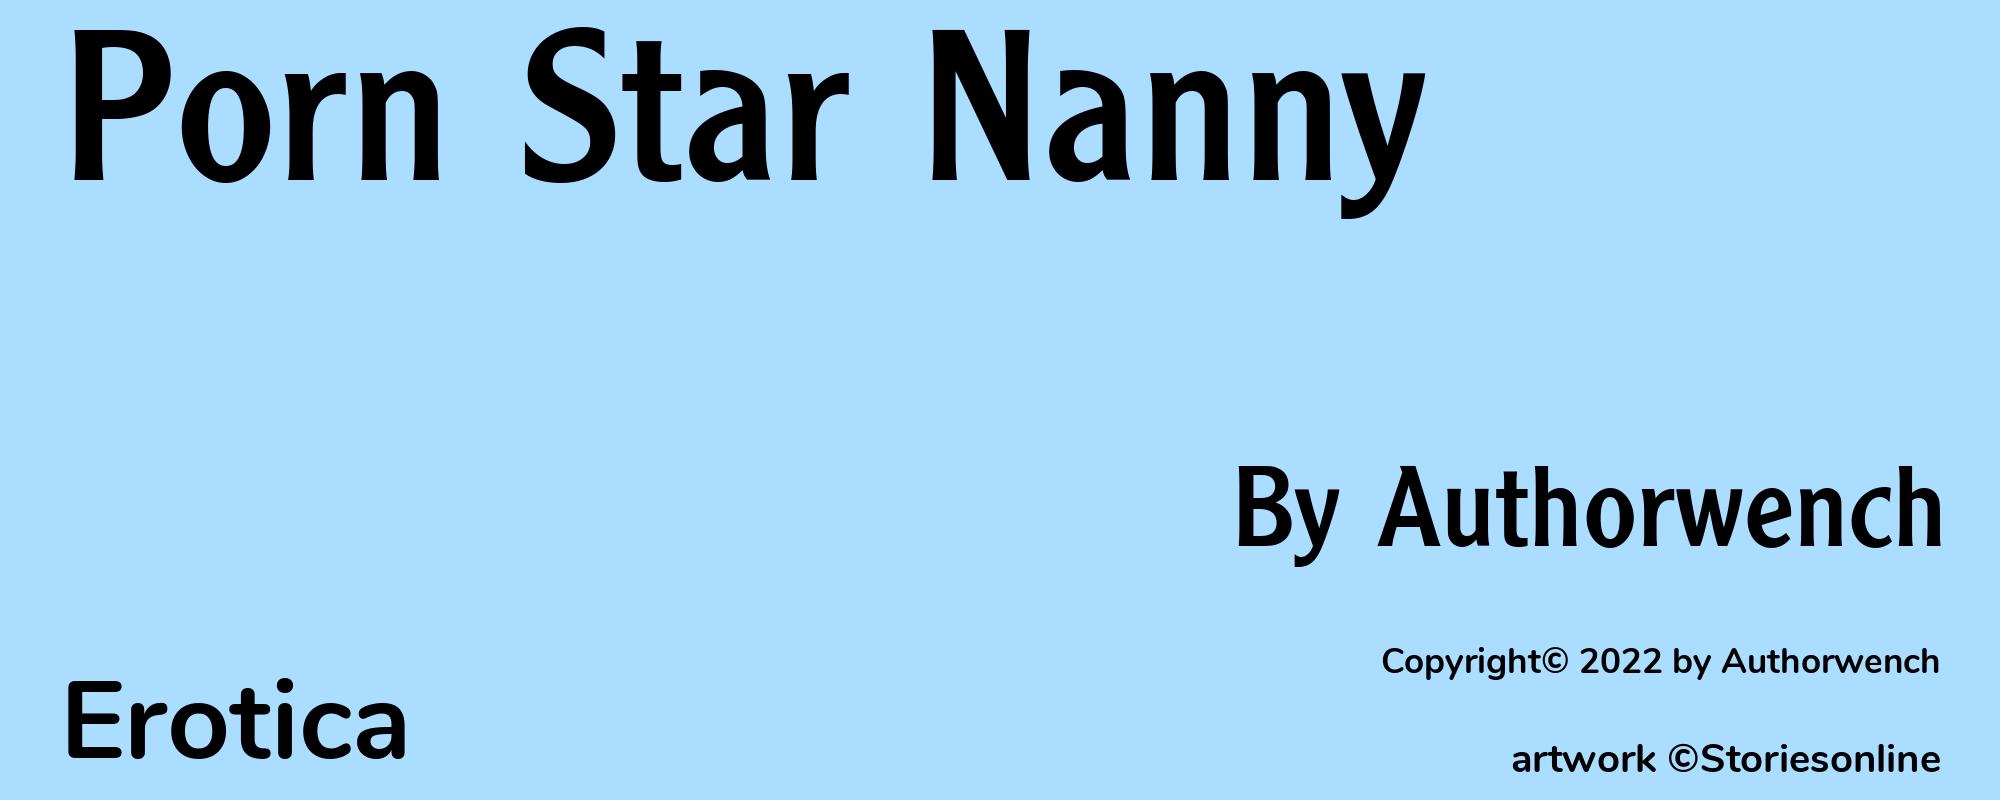 Porn Star Nanny - Cover